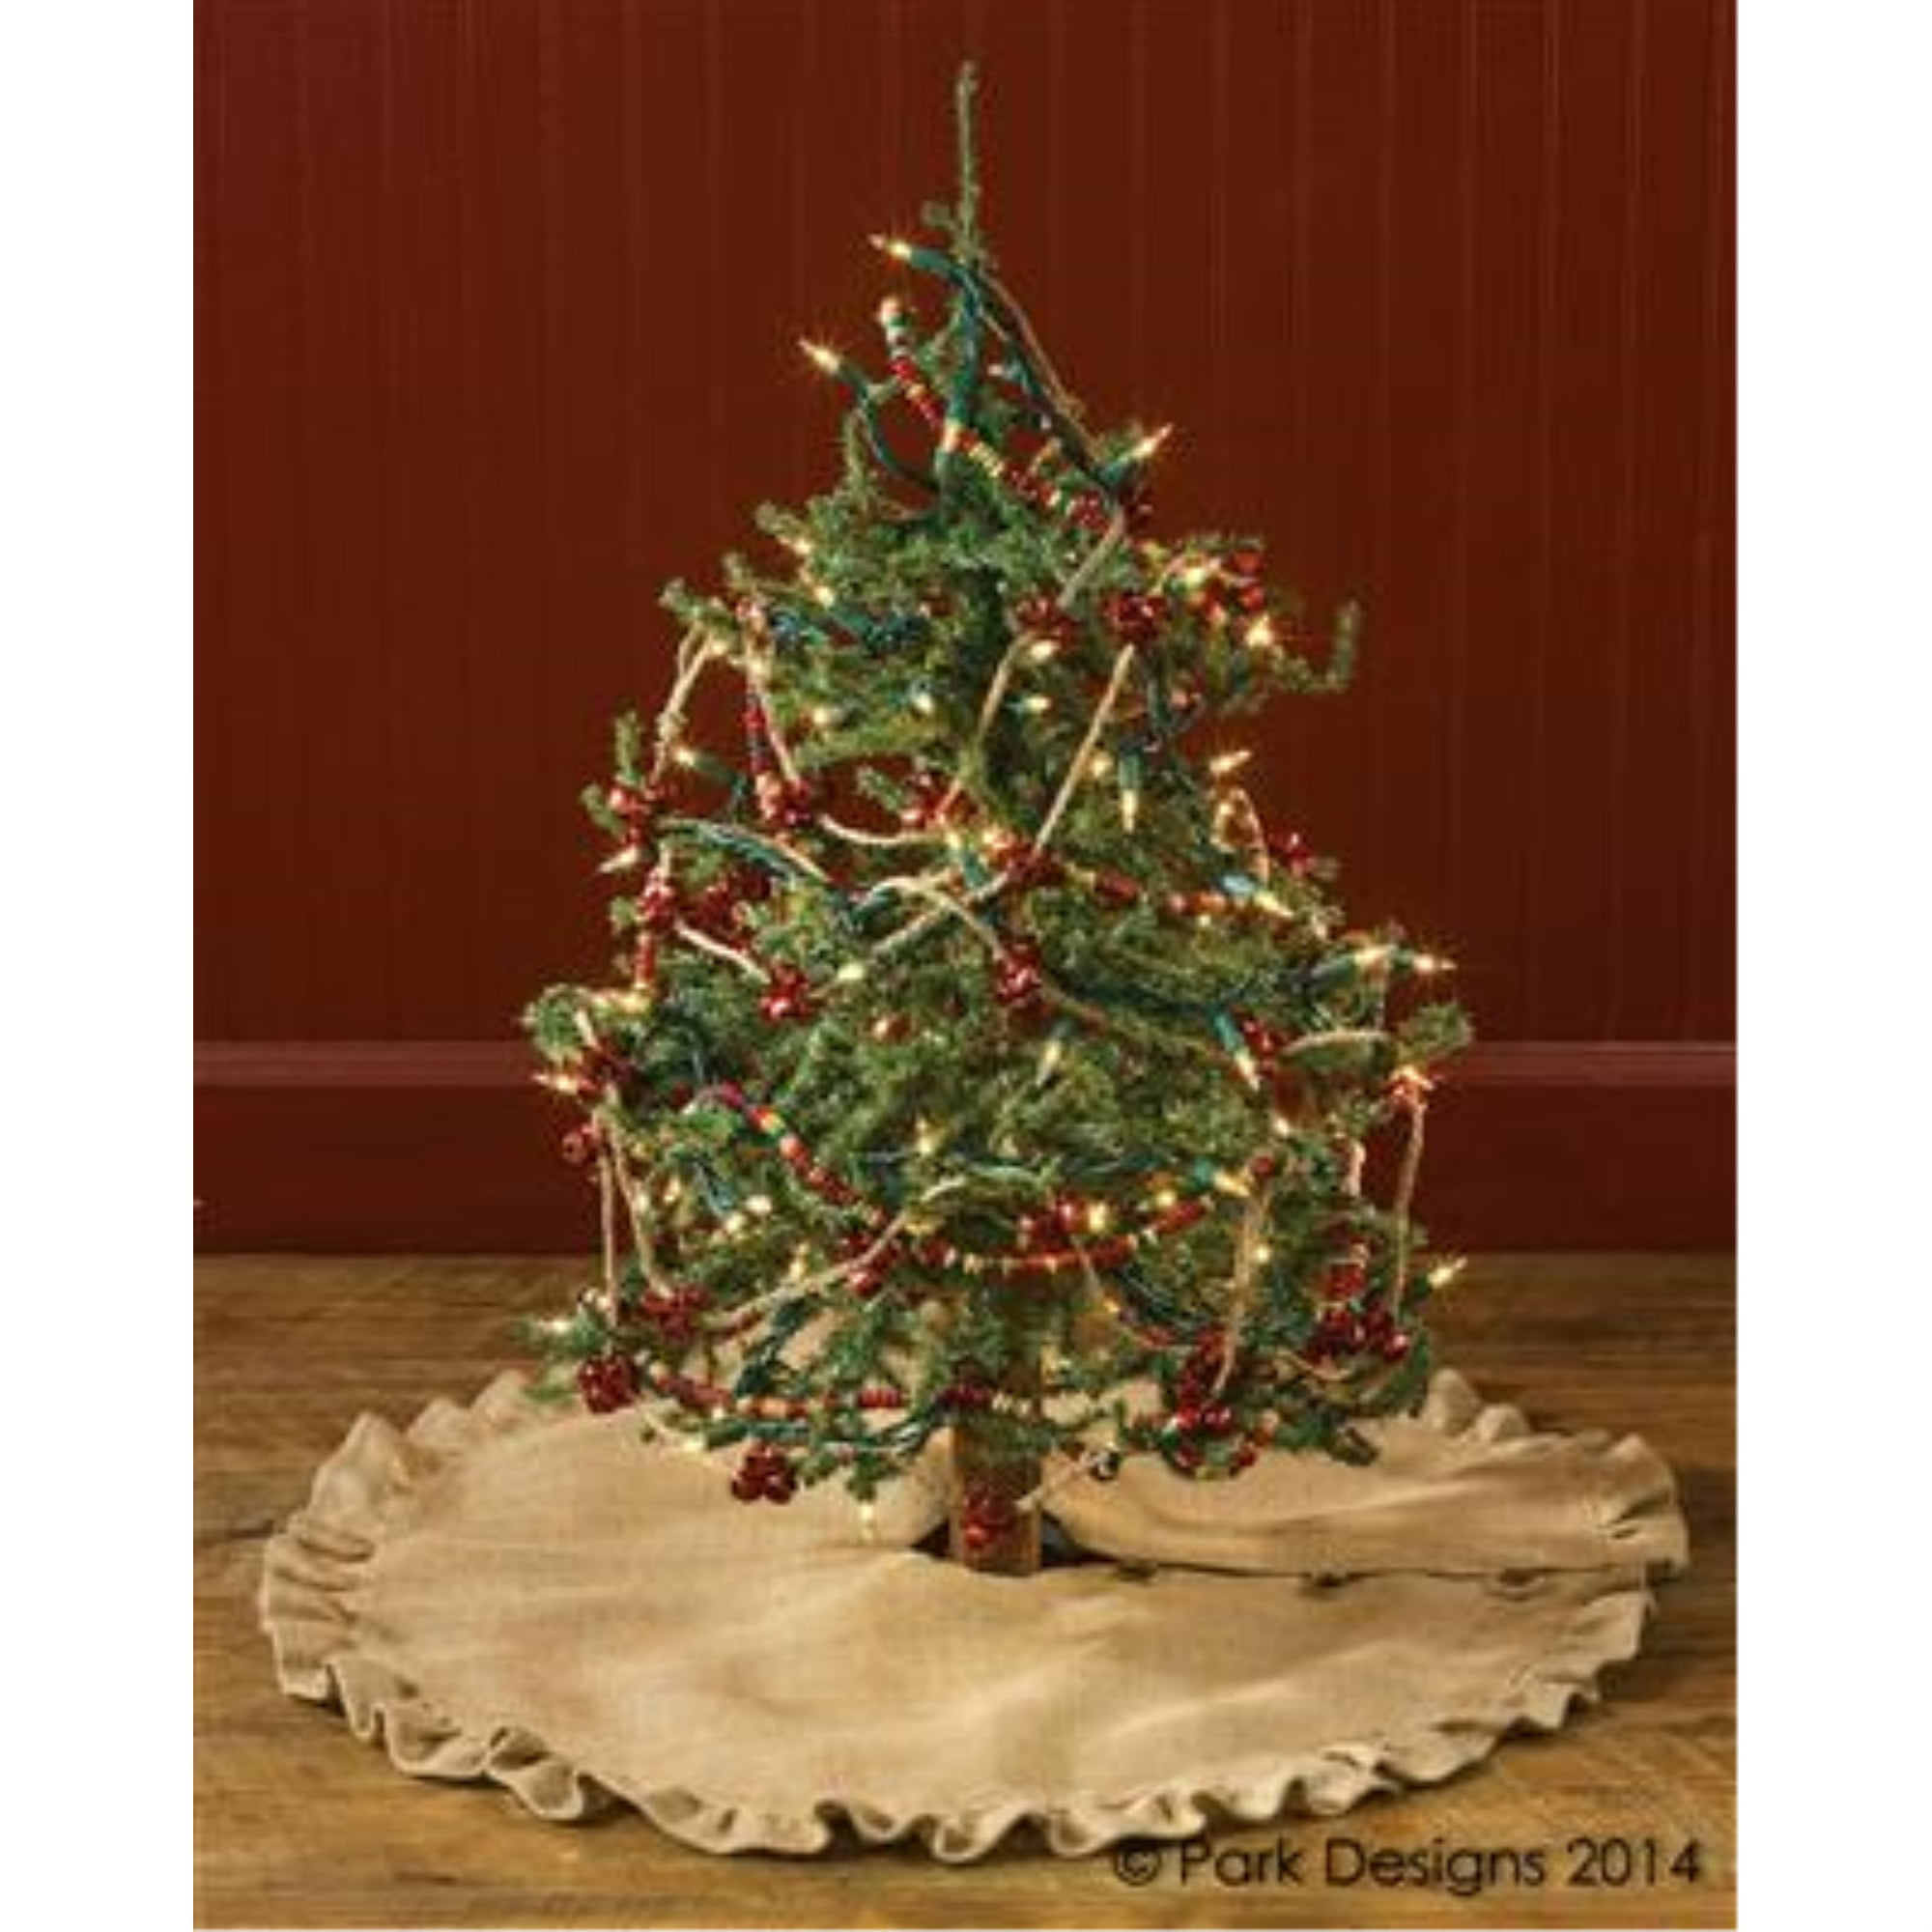 Brown Cream Christmas Tree Skirt 60" Faux Sheepskin by Park Designs 